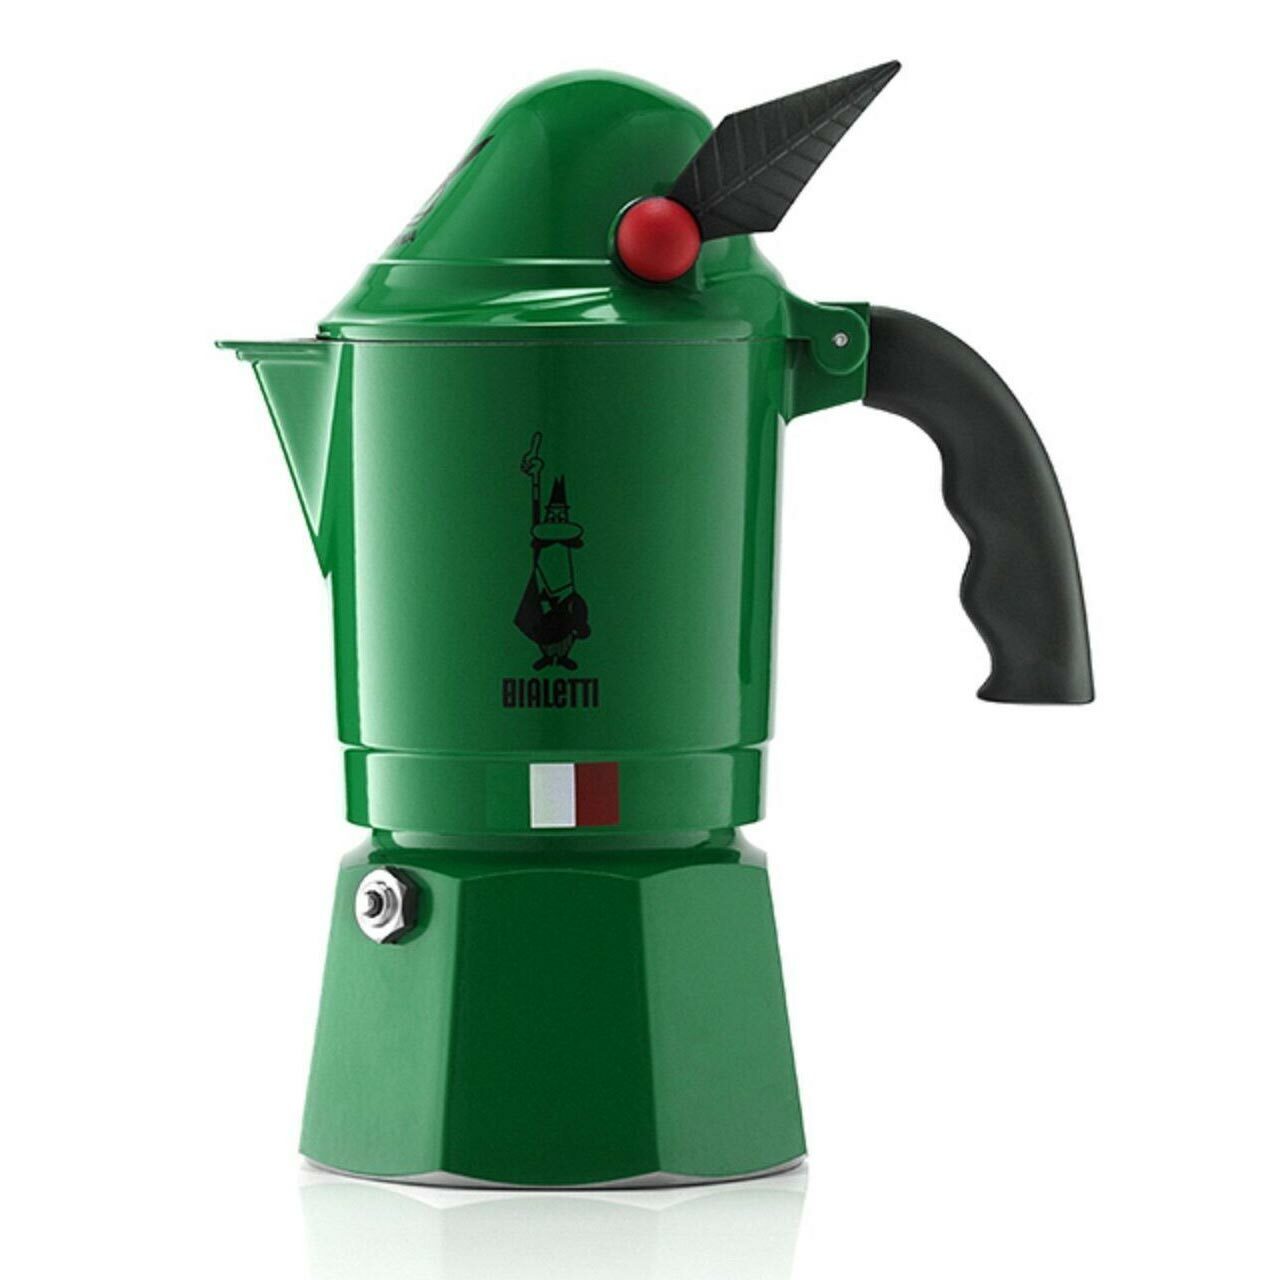 Bialetti Break Alpina Moka Pot Coffee Maker - 3 Cup